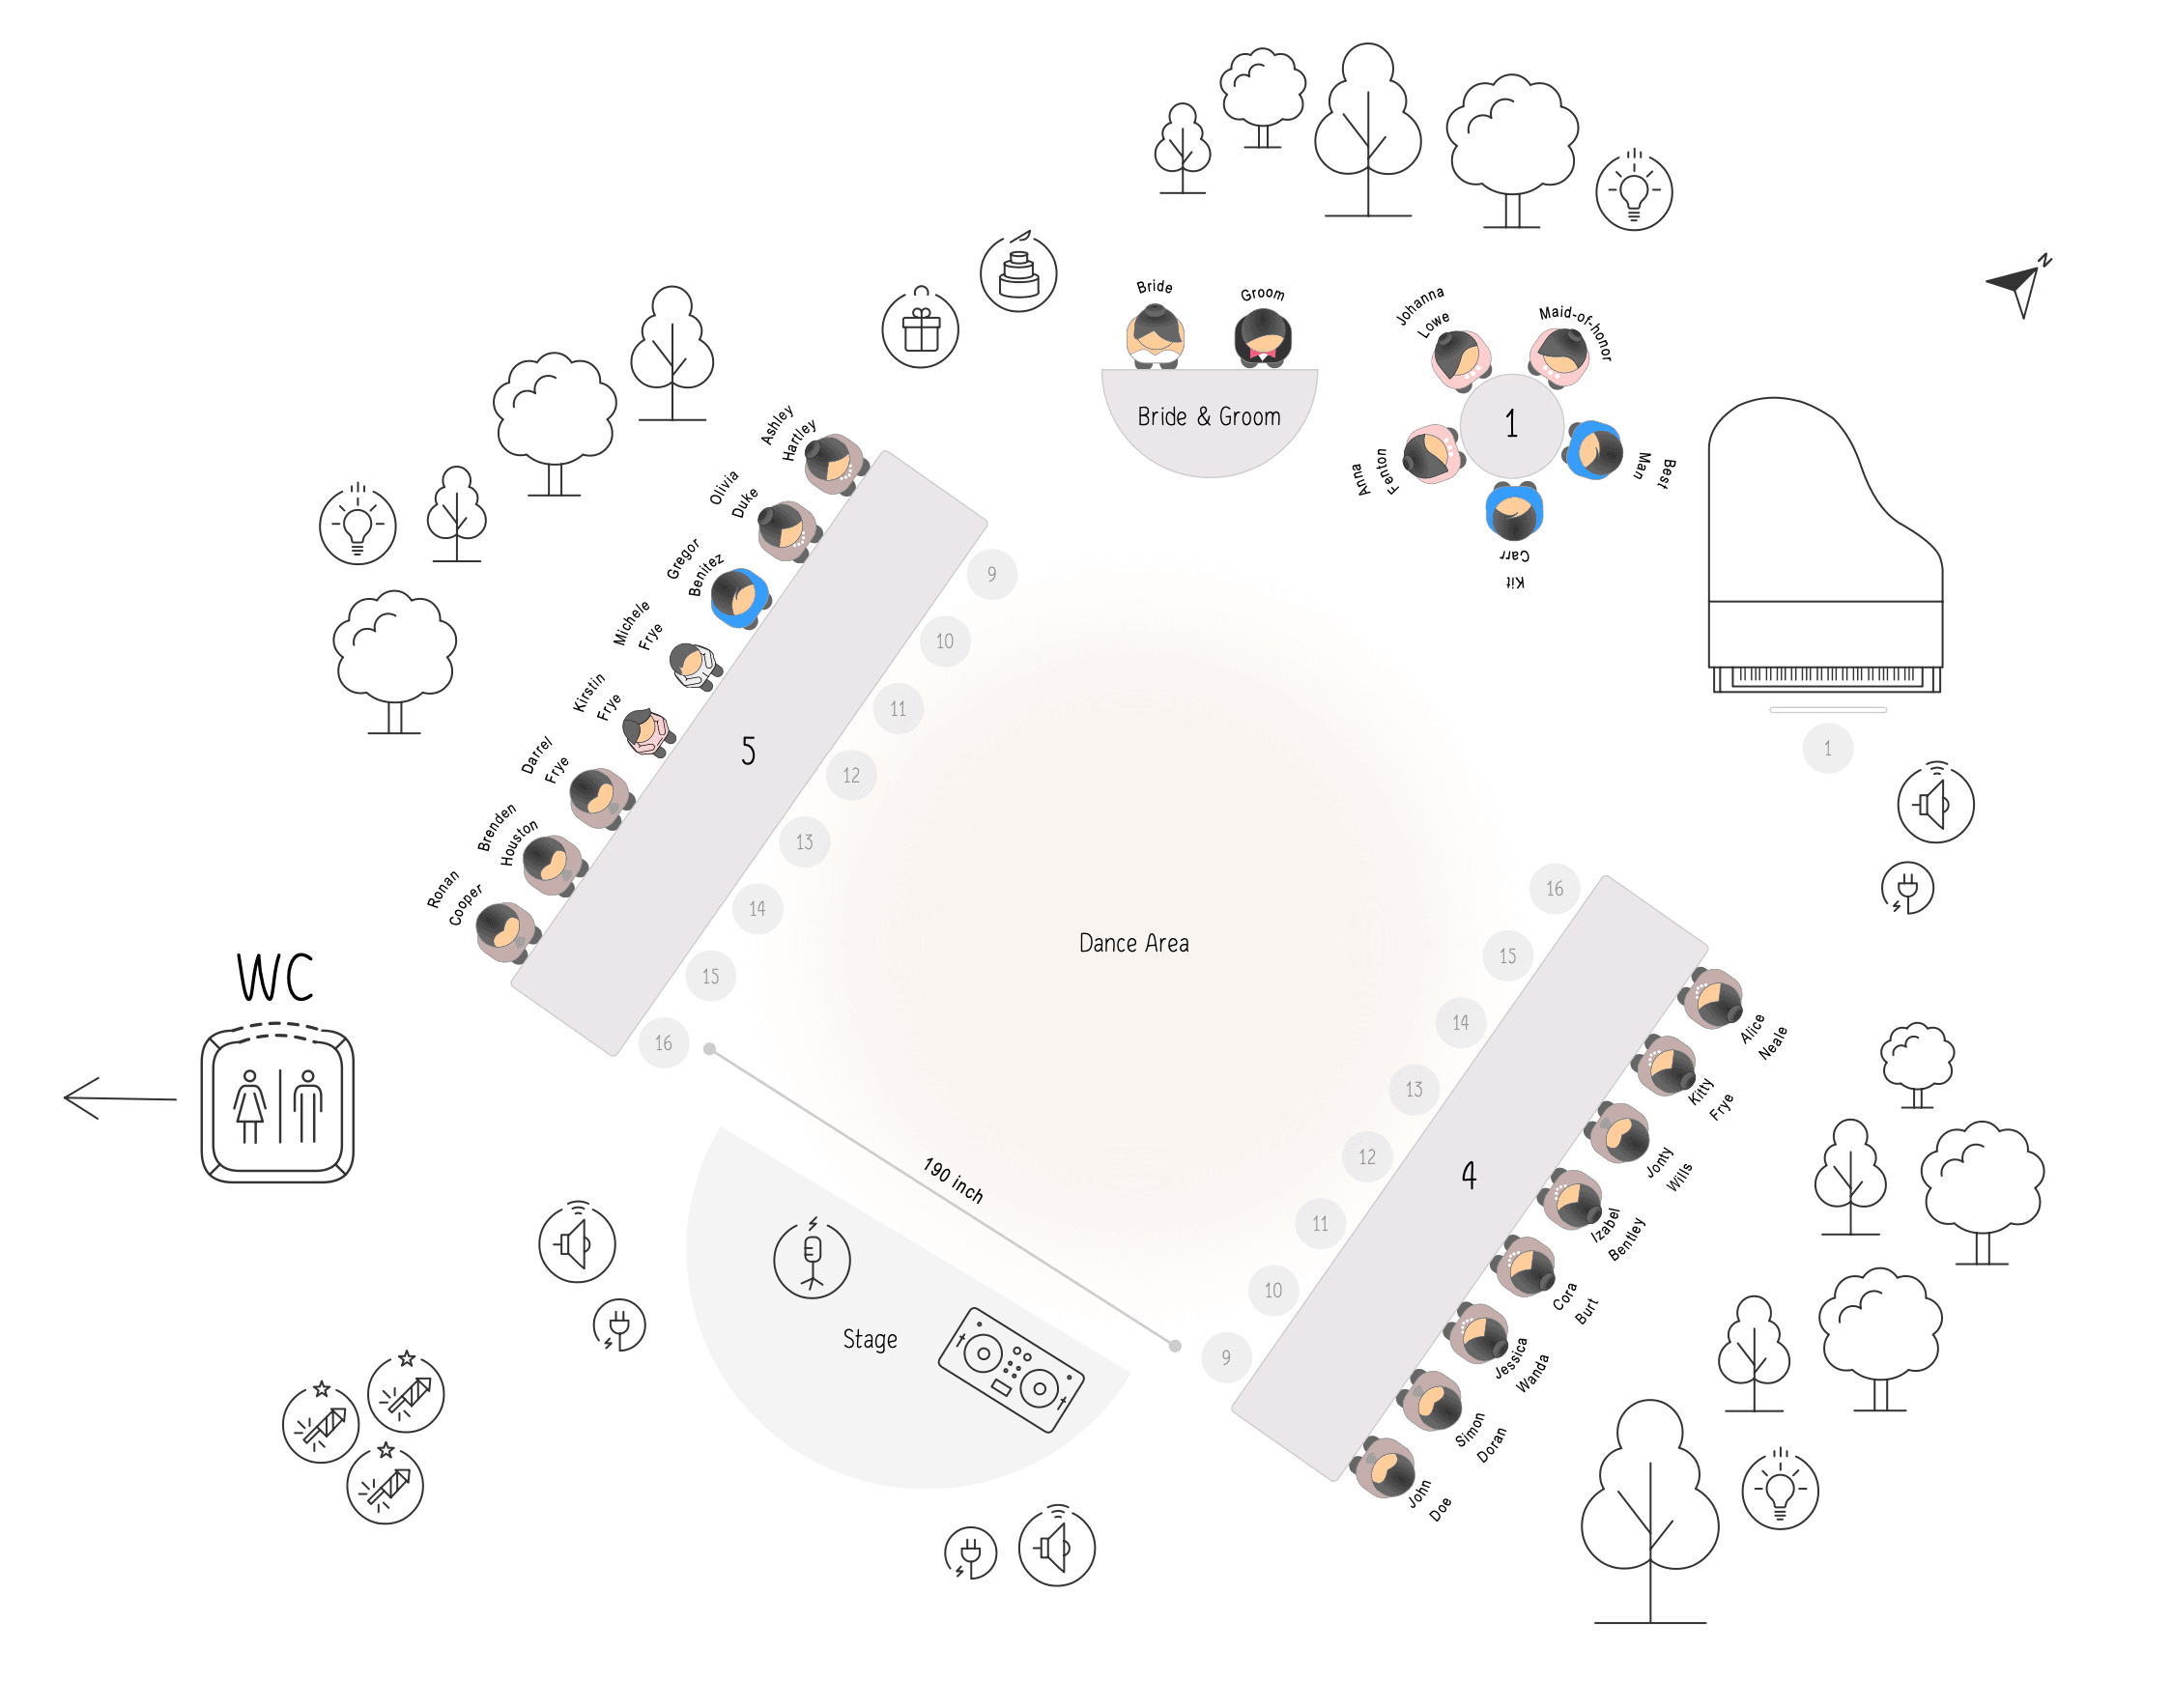 Ilustračný graf sedenia